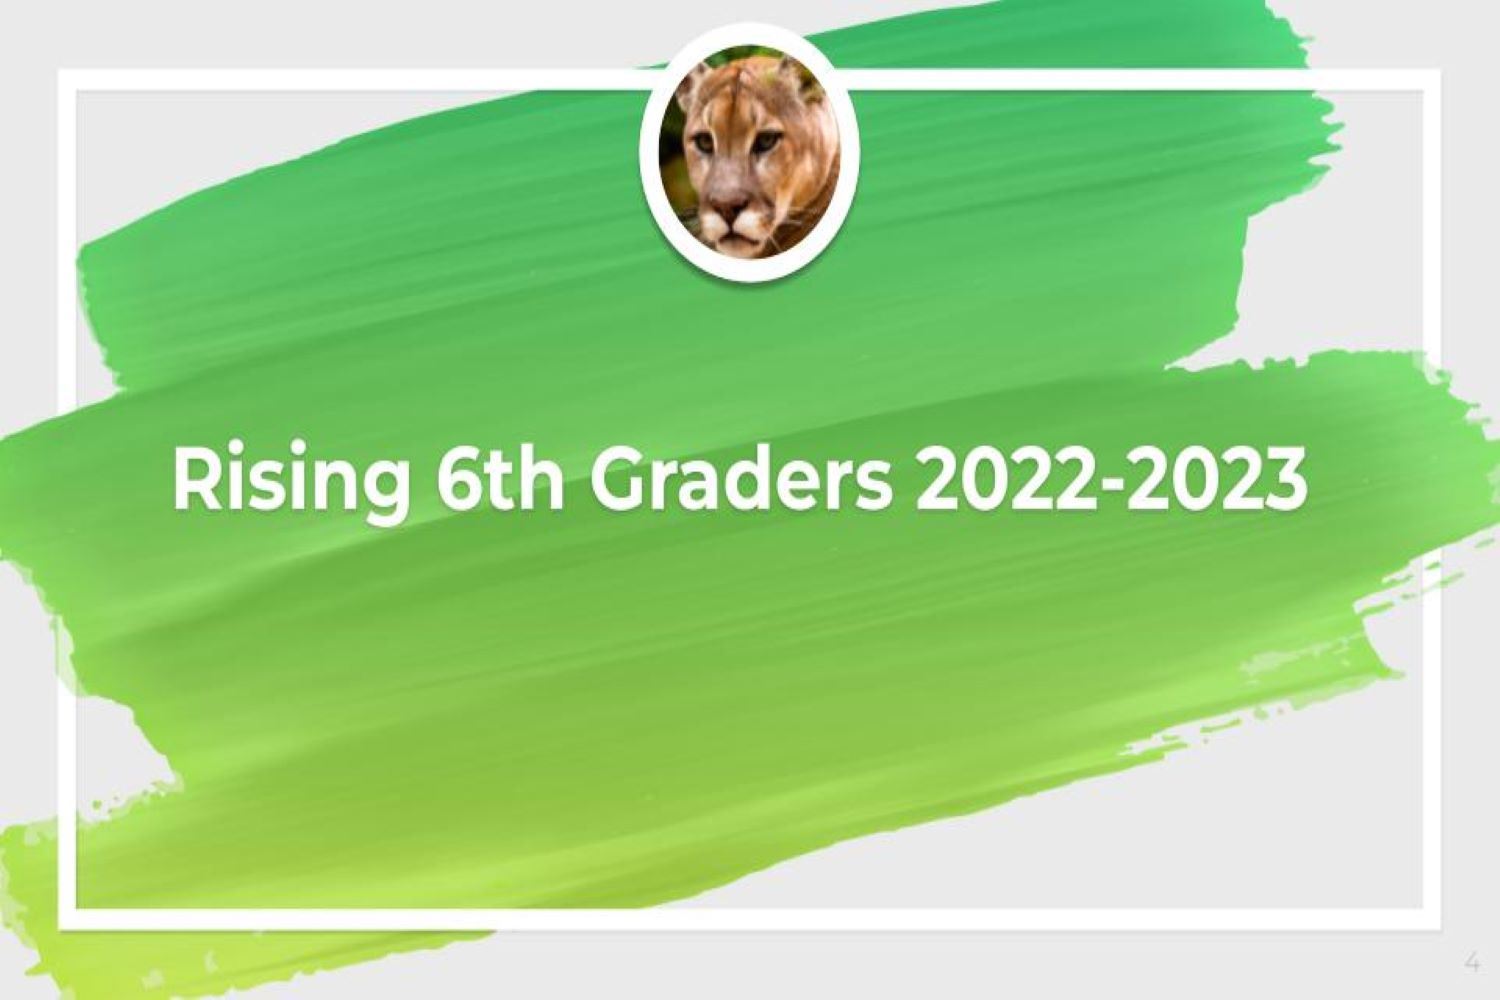  Rising 6th Graders 2022-2023